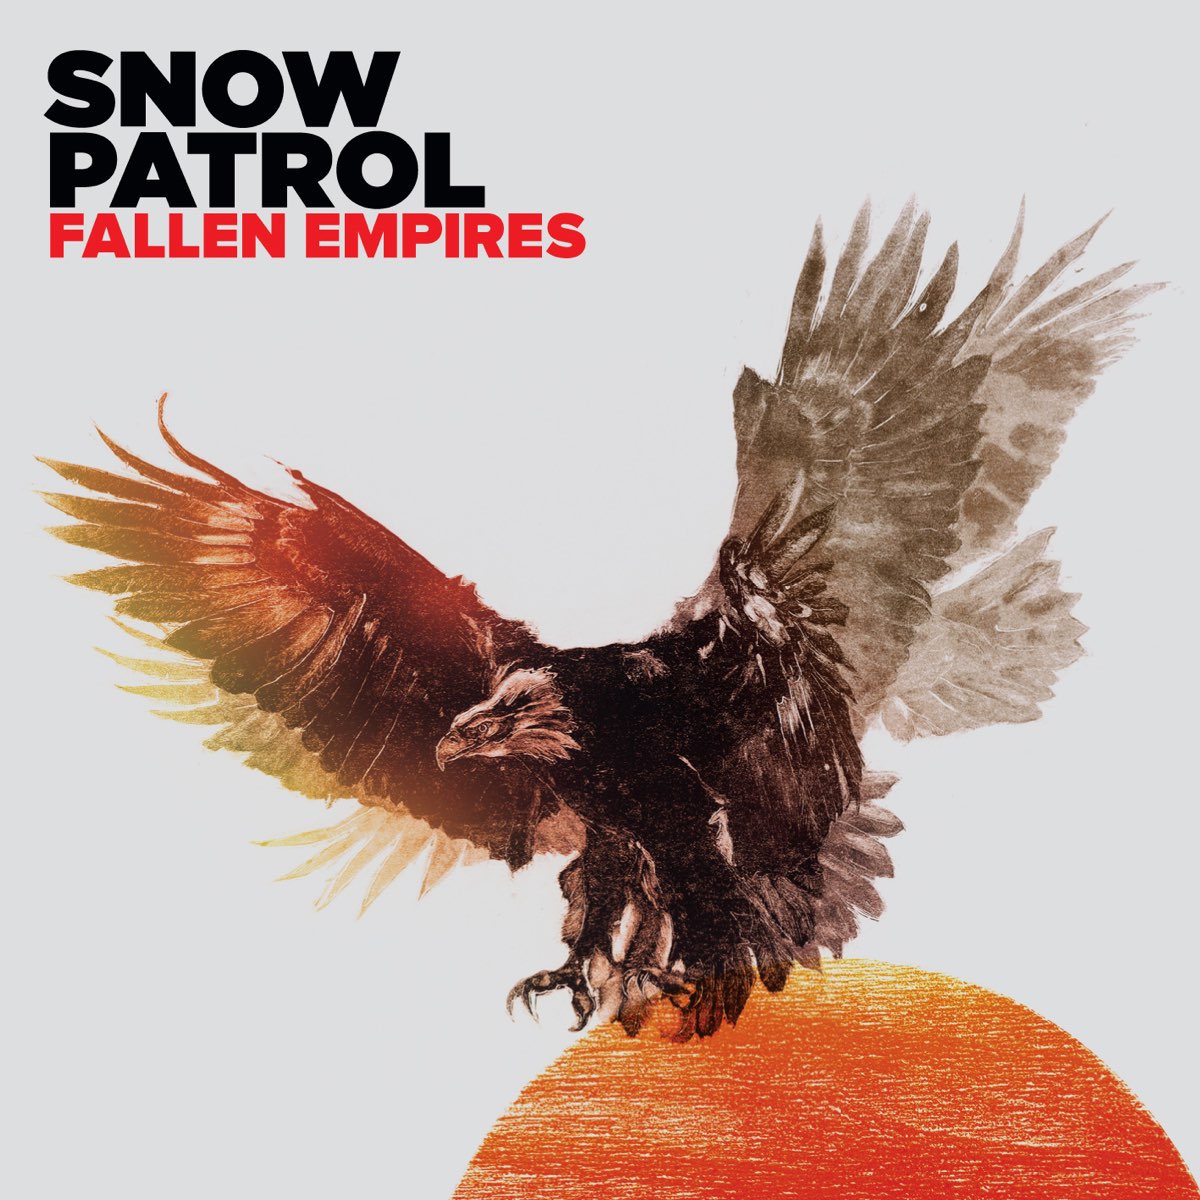 Snow Patrol Fallen Empires cover artwork